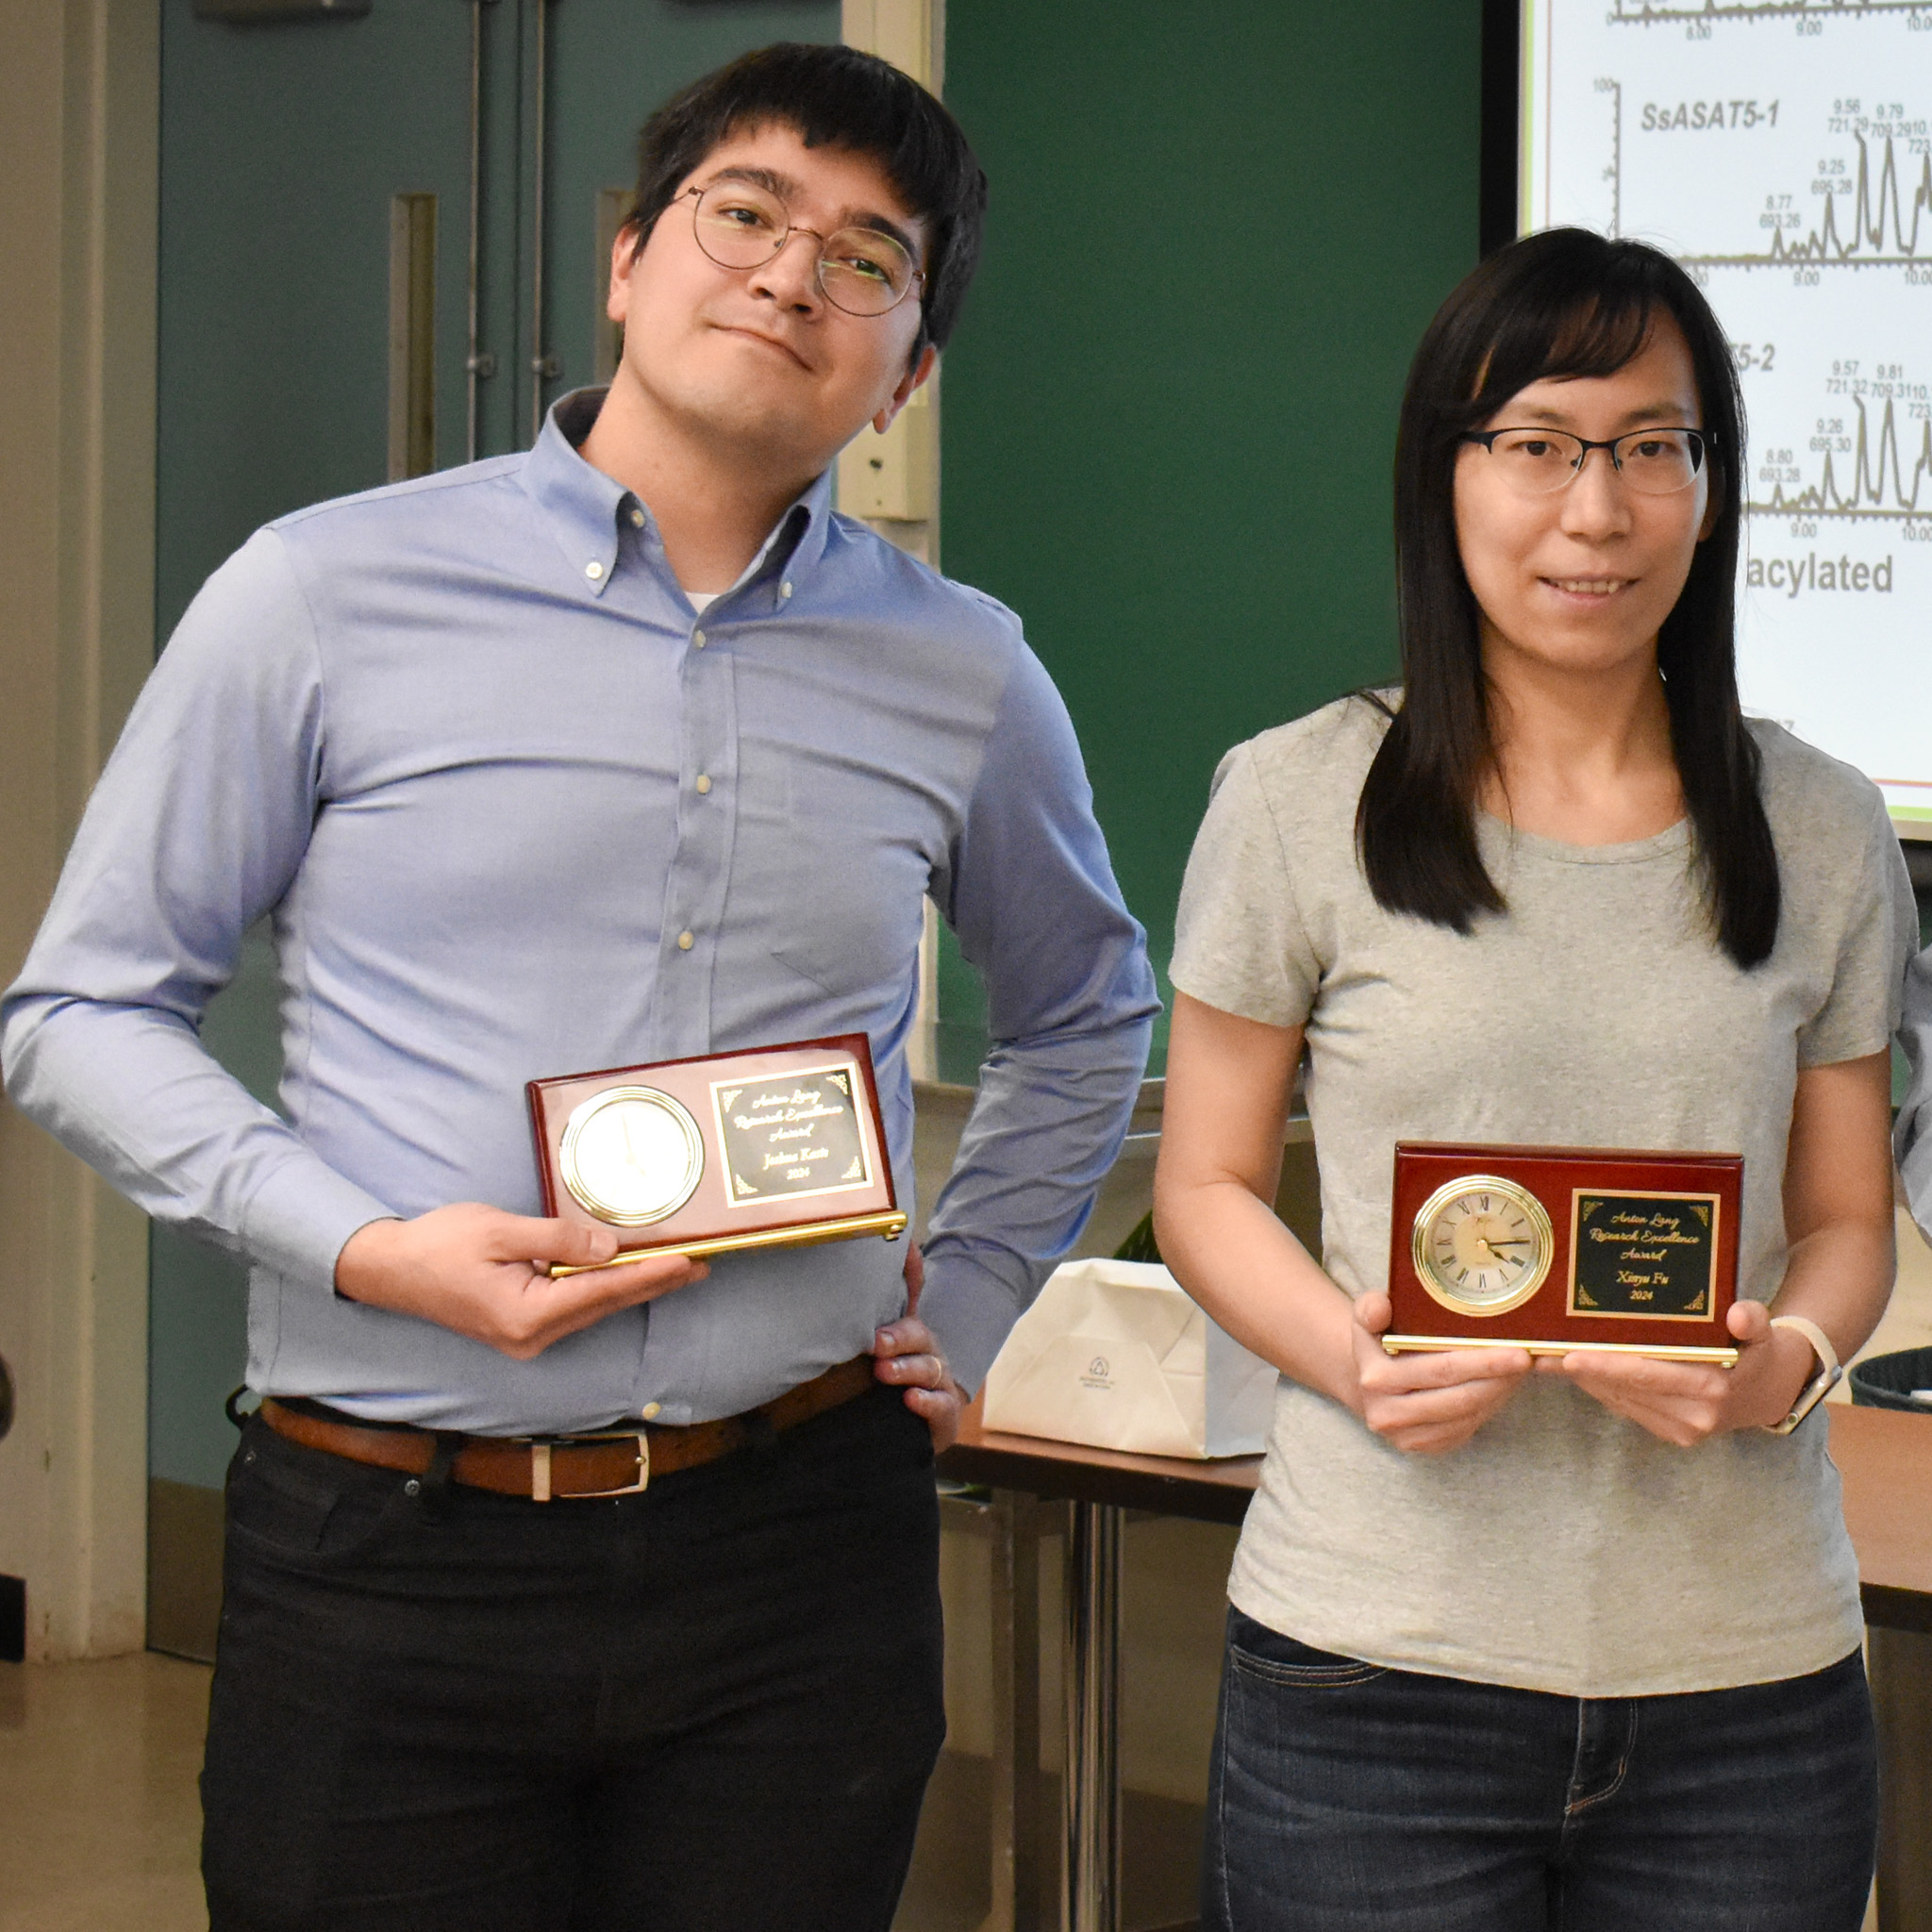 Joshua Kaste and Xinyu Fu, holding their awards.